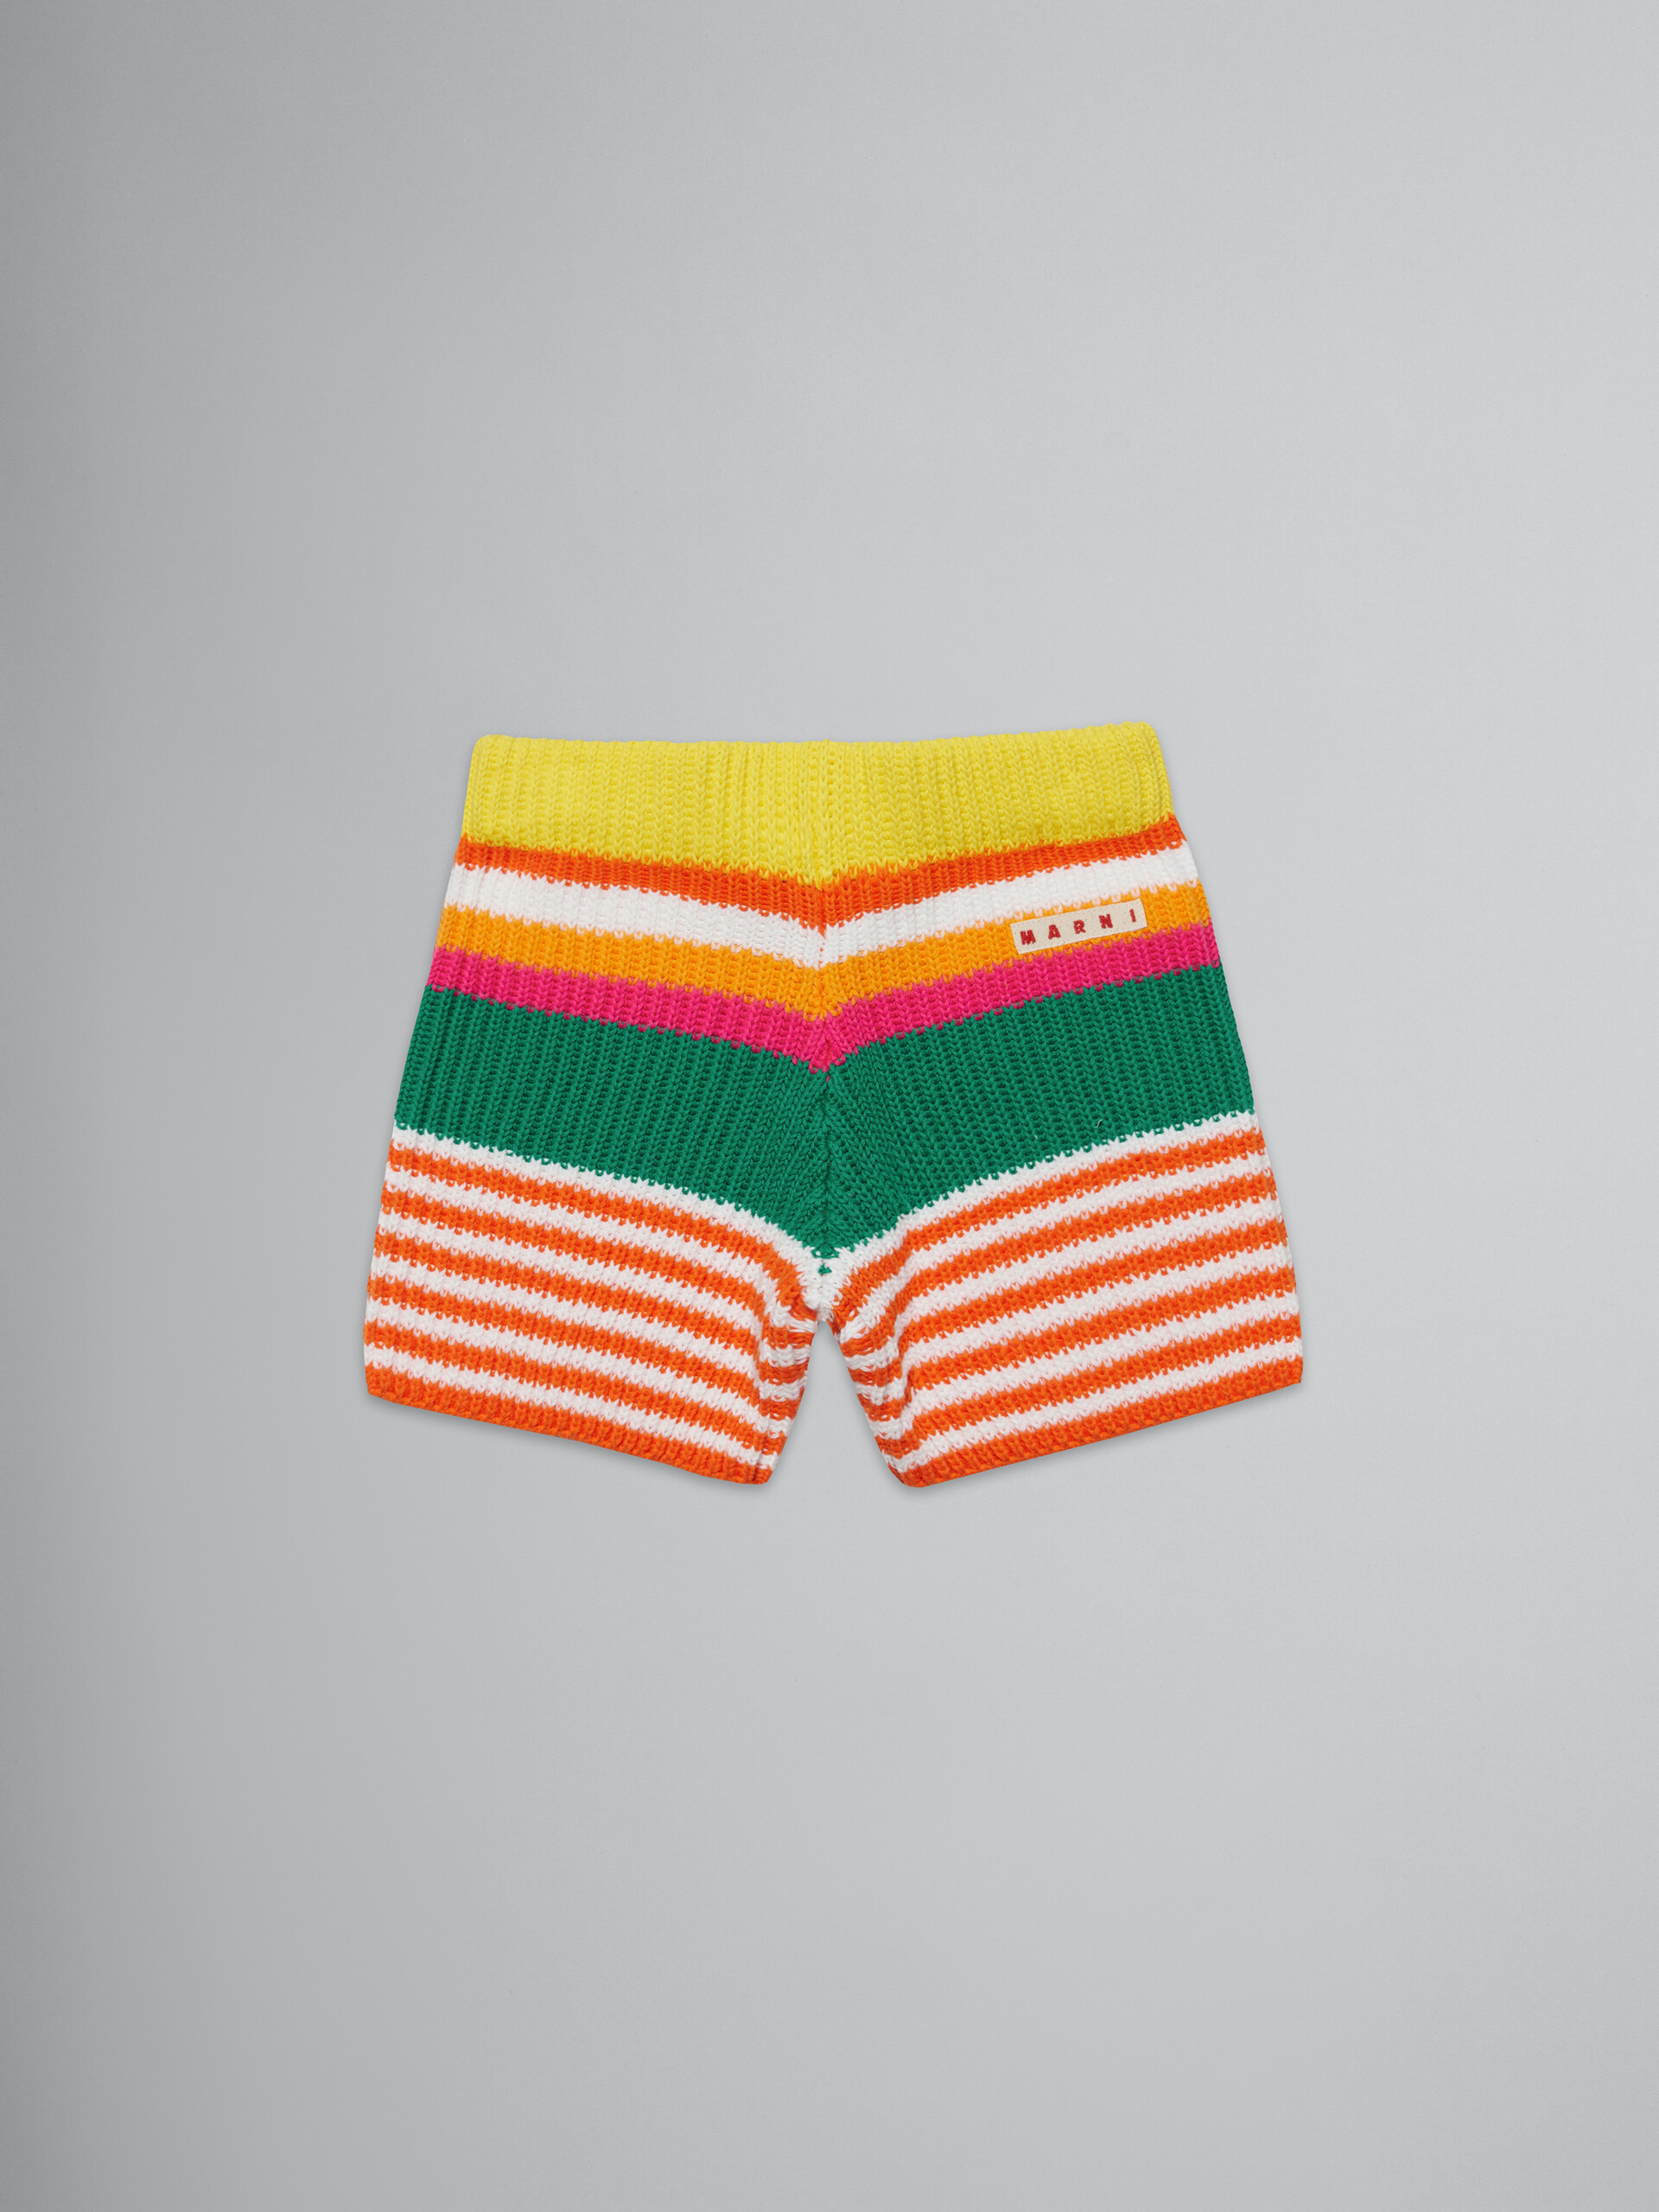 Multicolor striped knit shorts - Pants - Image 1